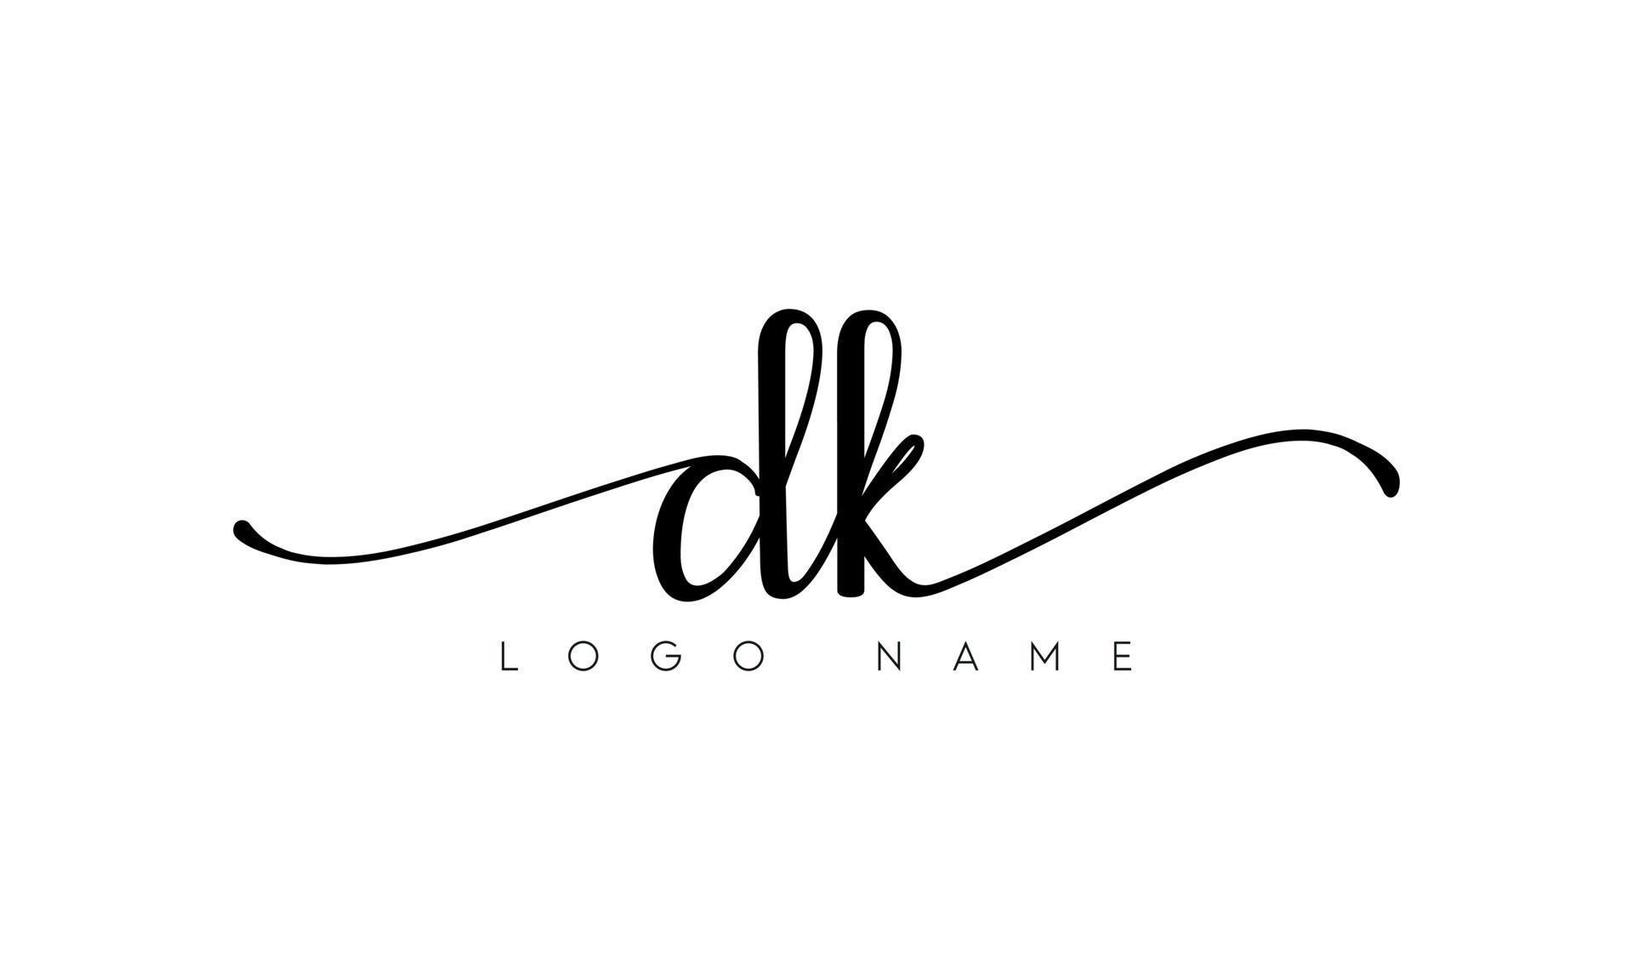 Handwriting letter DK logo pro vector file pro Vector Pro Vector